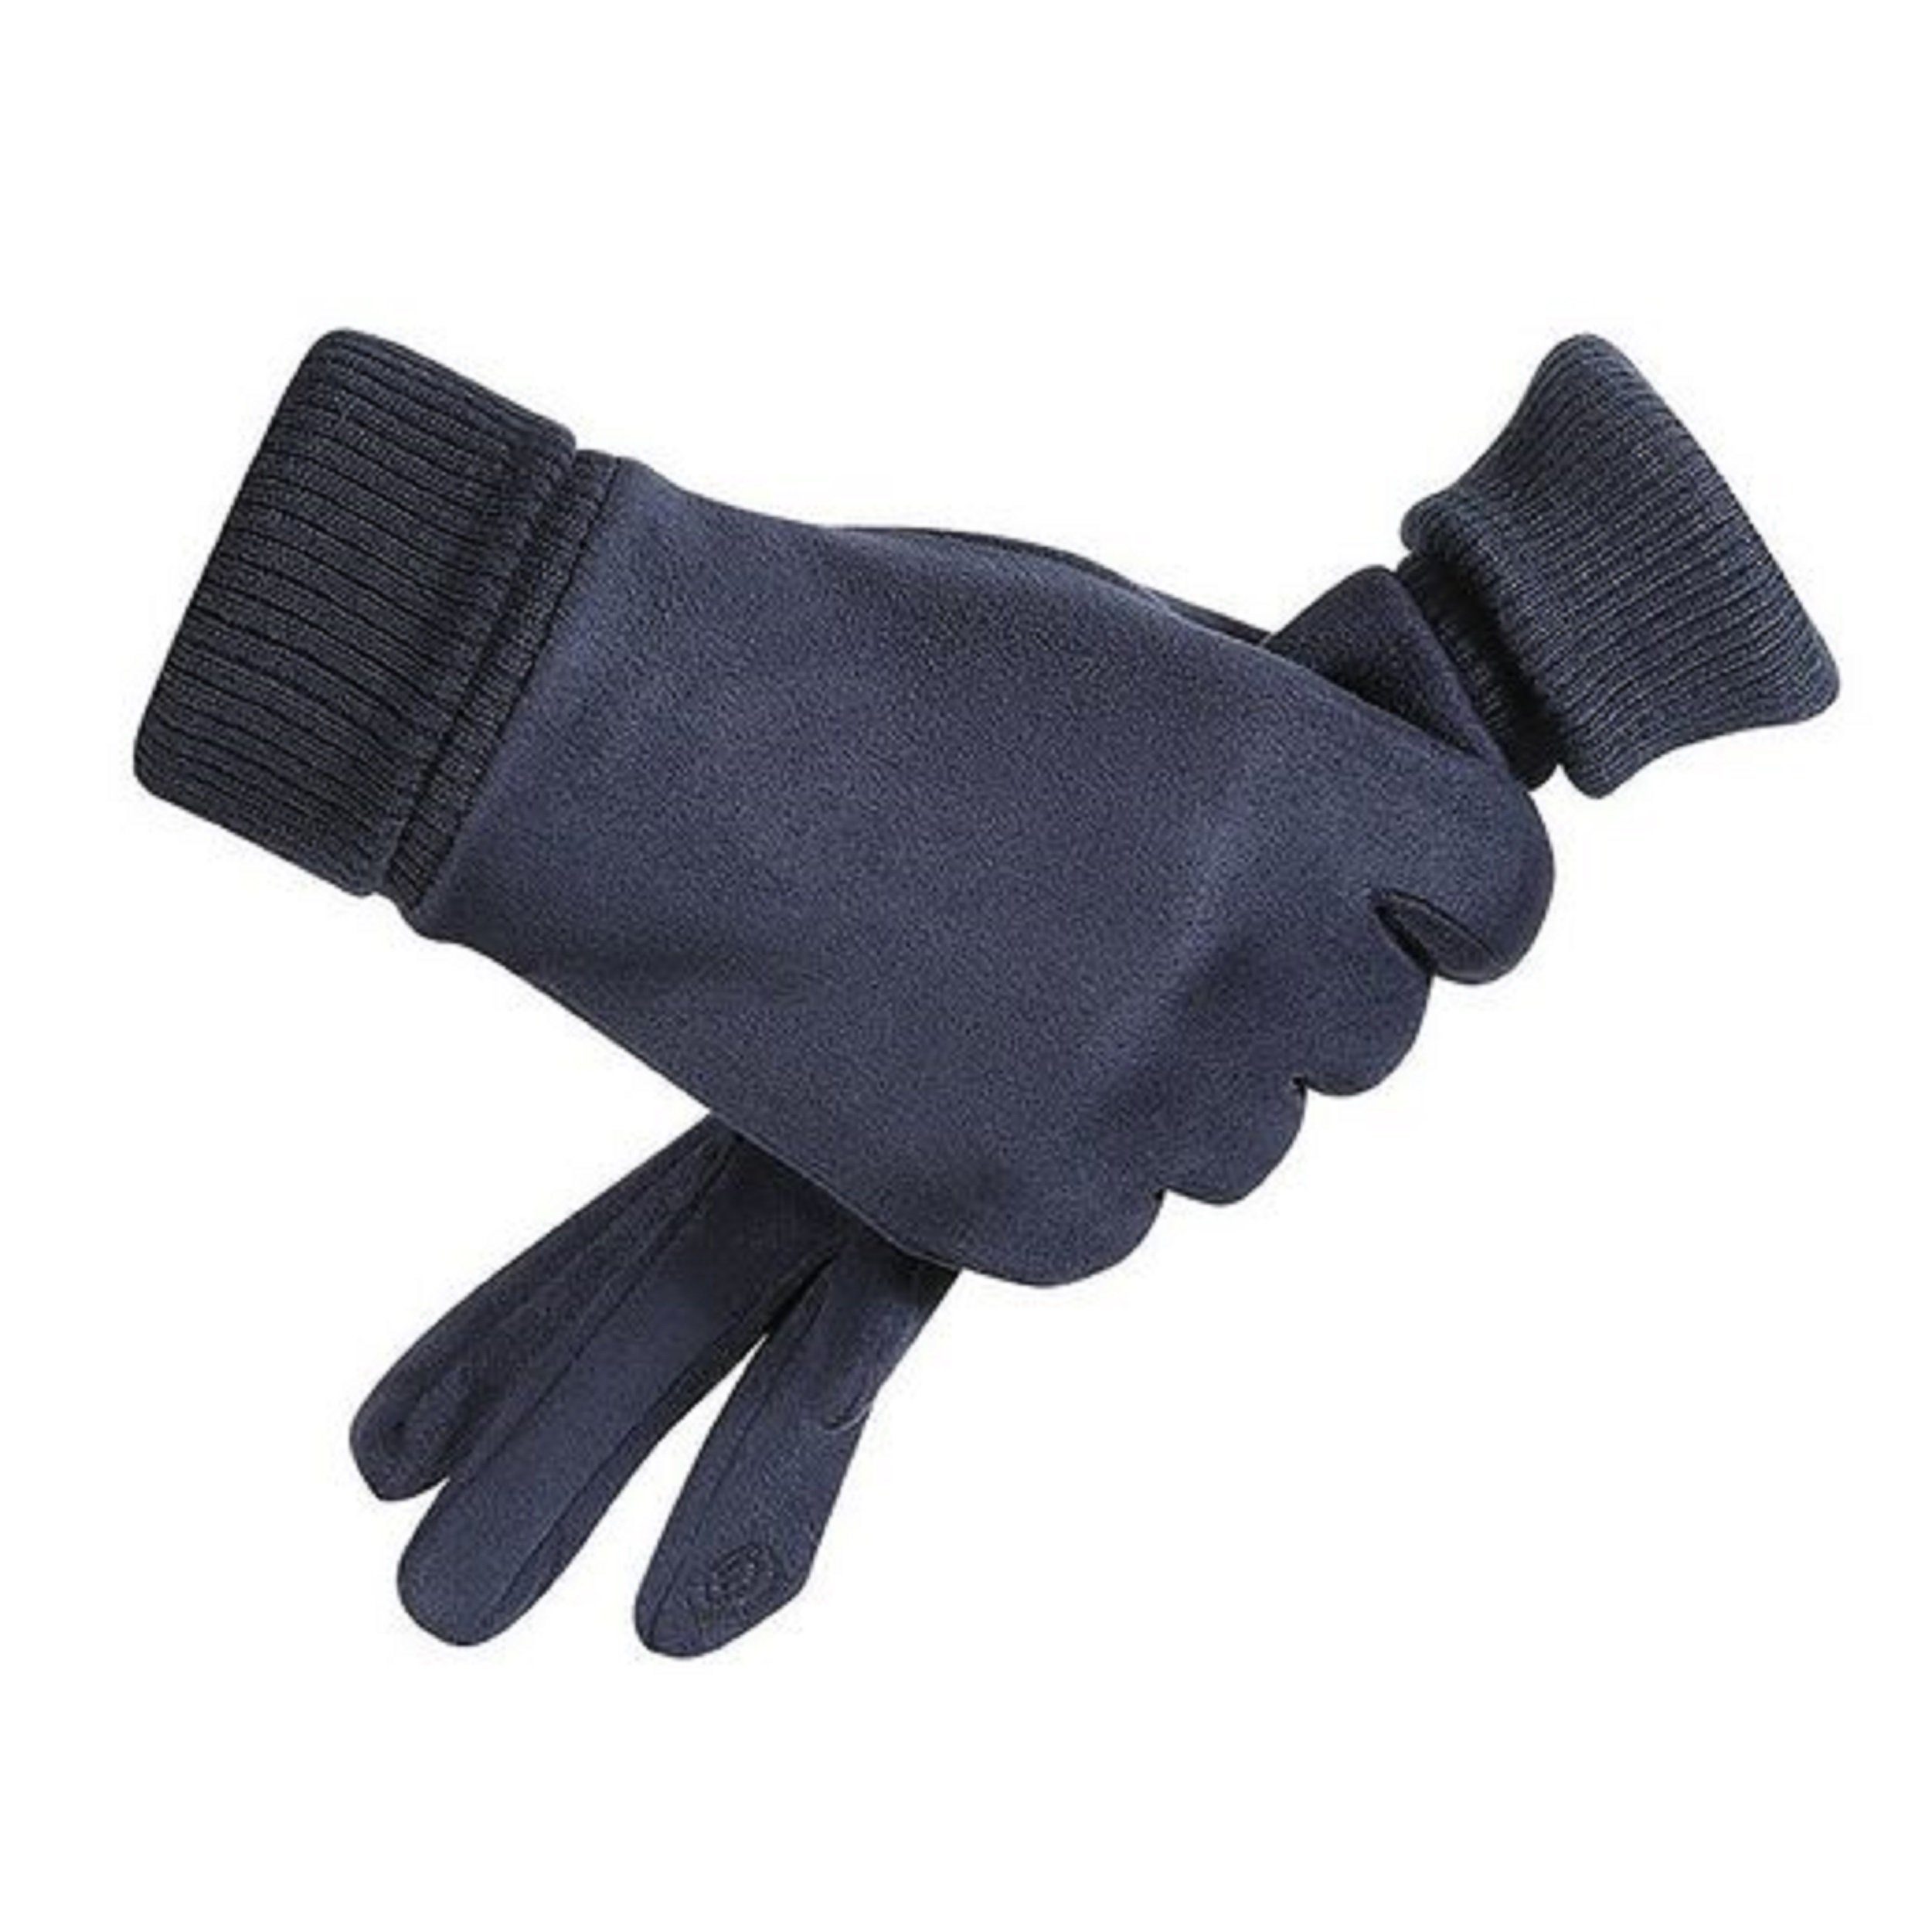 SRRINM Skihandschuhe Warm Reiten Skifahren Coldproof Touchscreen Handschuhe